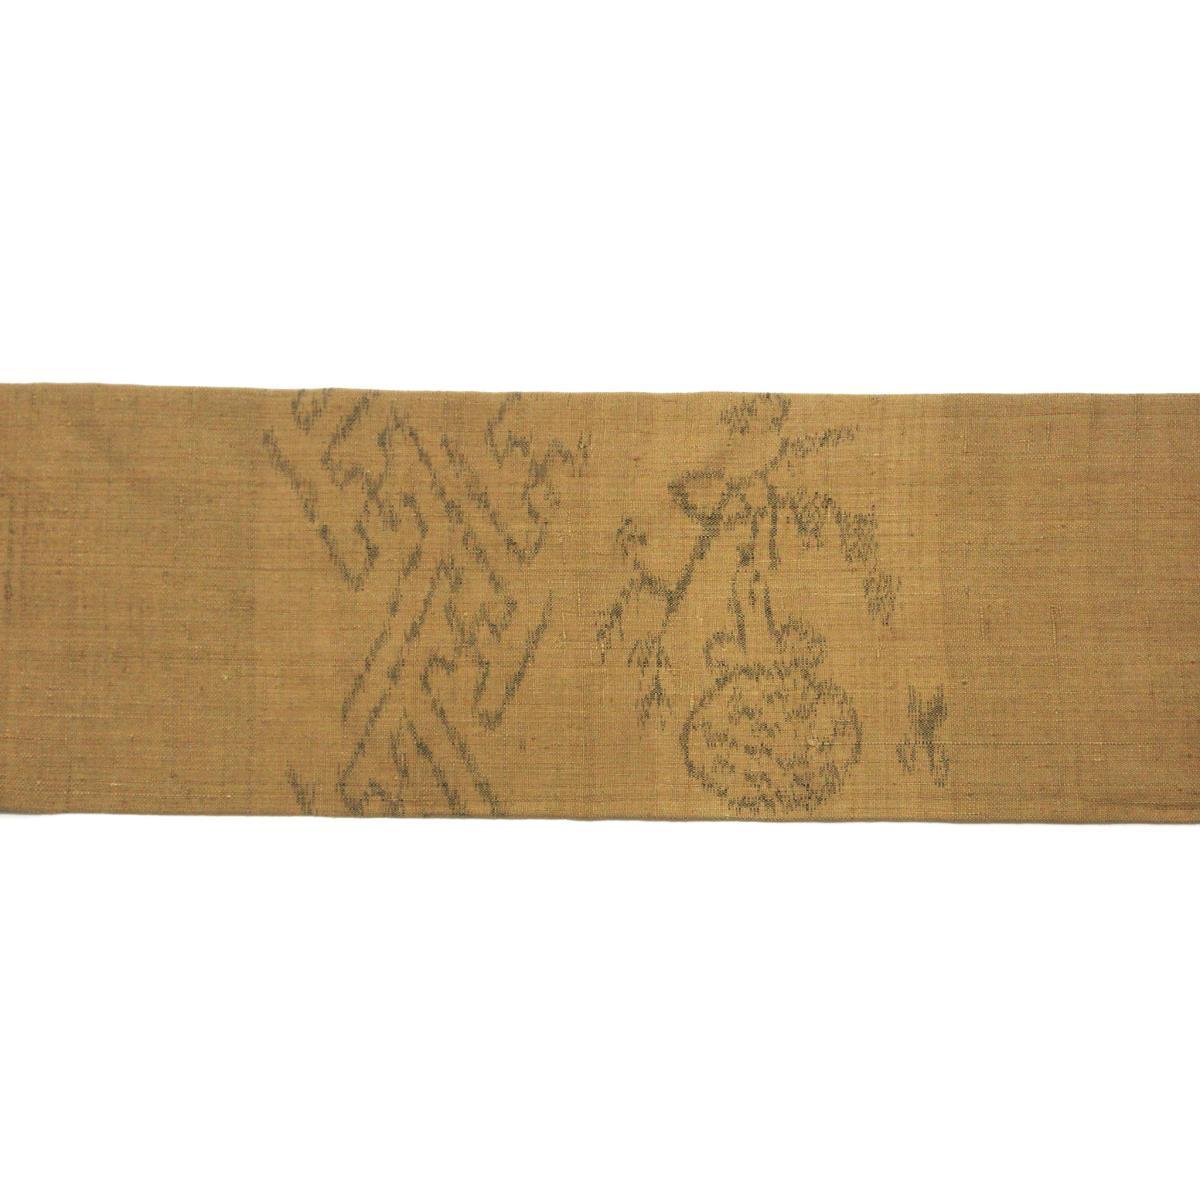 Nagoya obi pongee weave